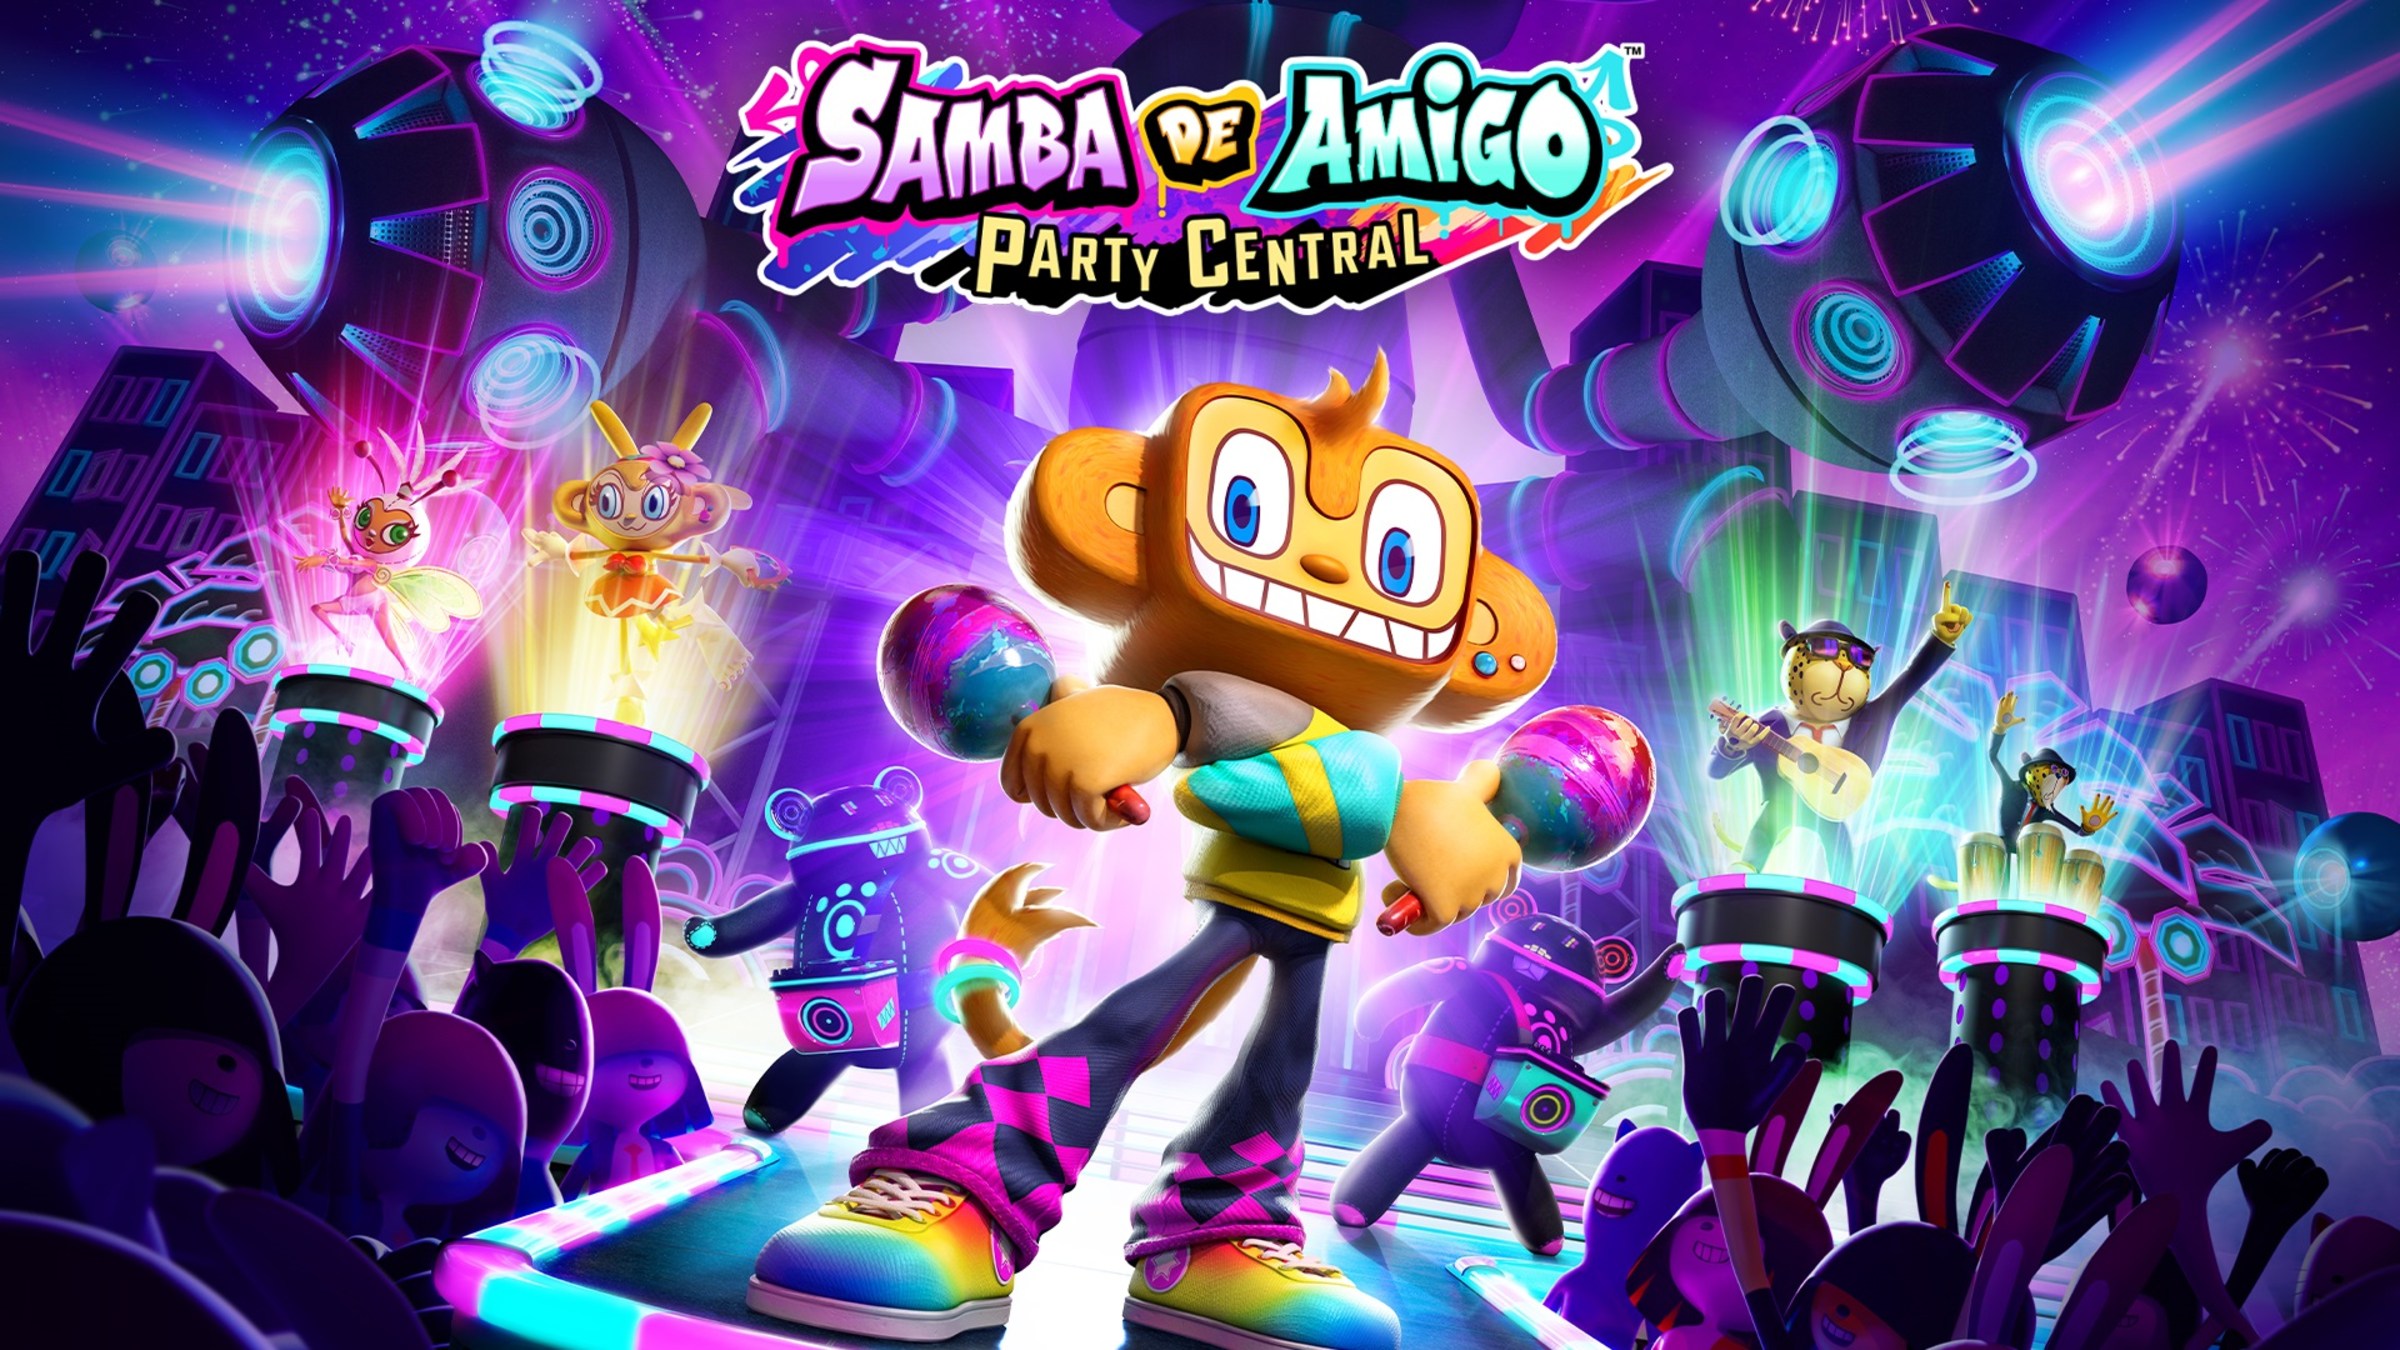 Samba de Amigo: Party Central Releases On August 29th for Nintendo